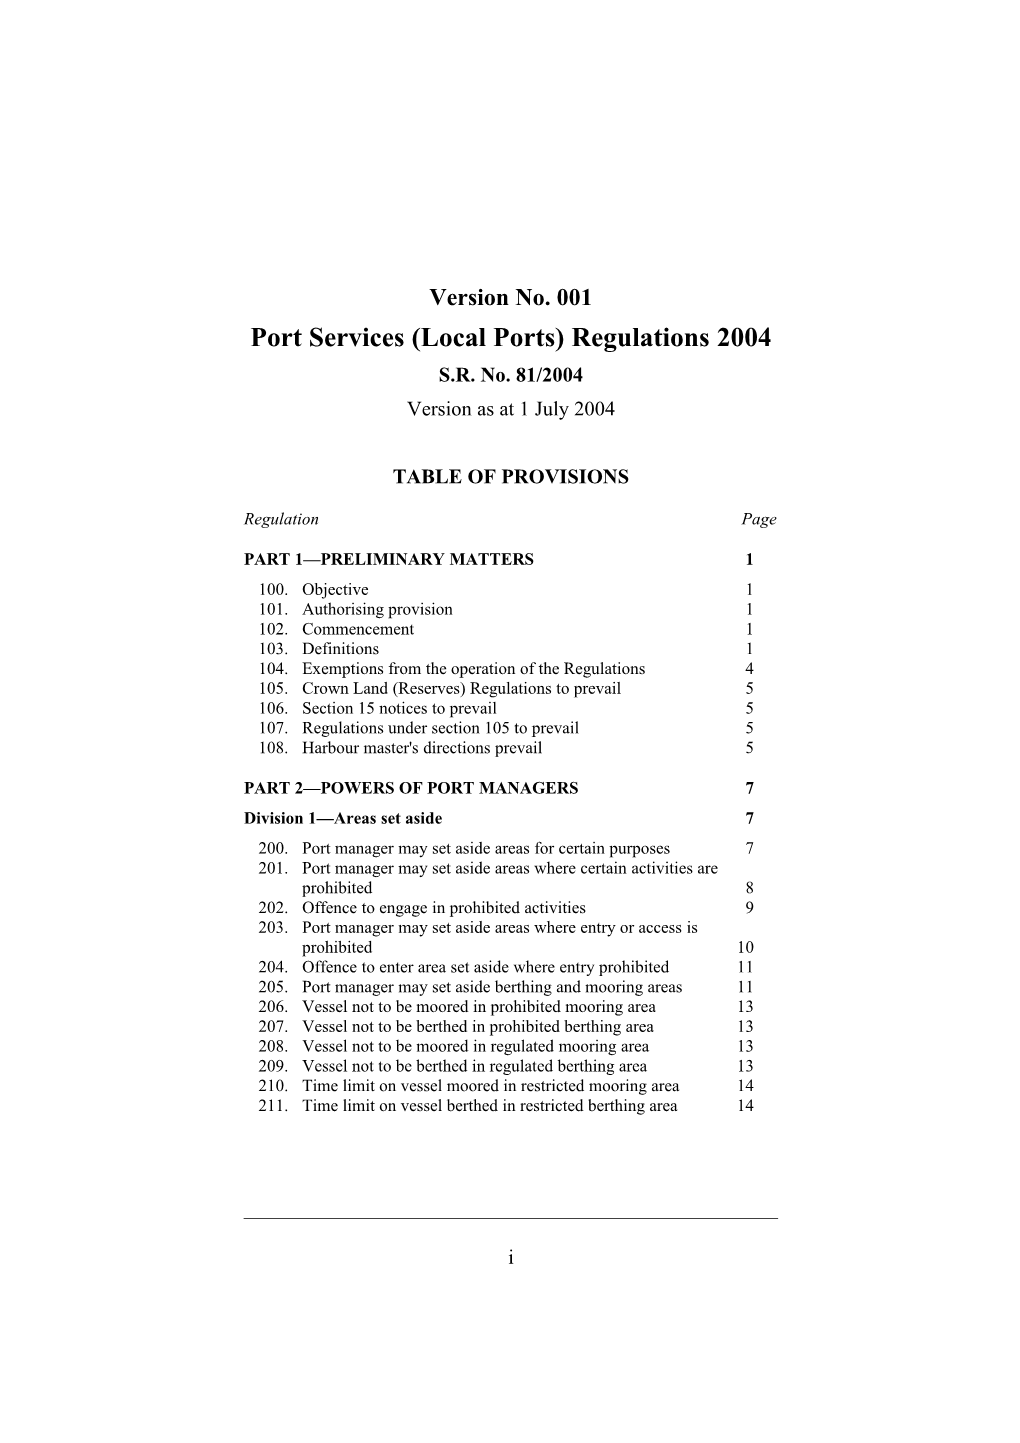 Port Services (Local Ports) Regulations 2004